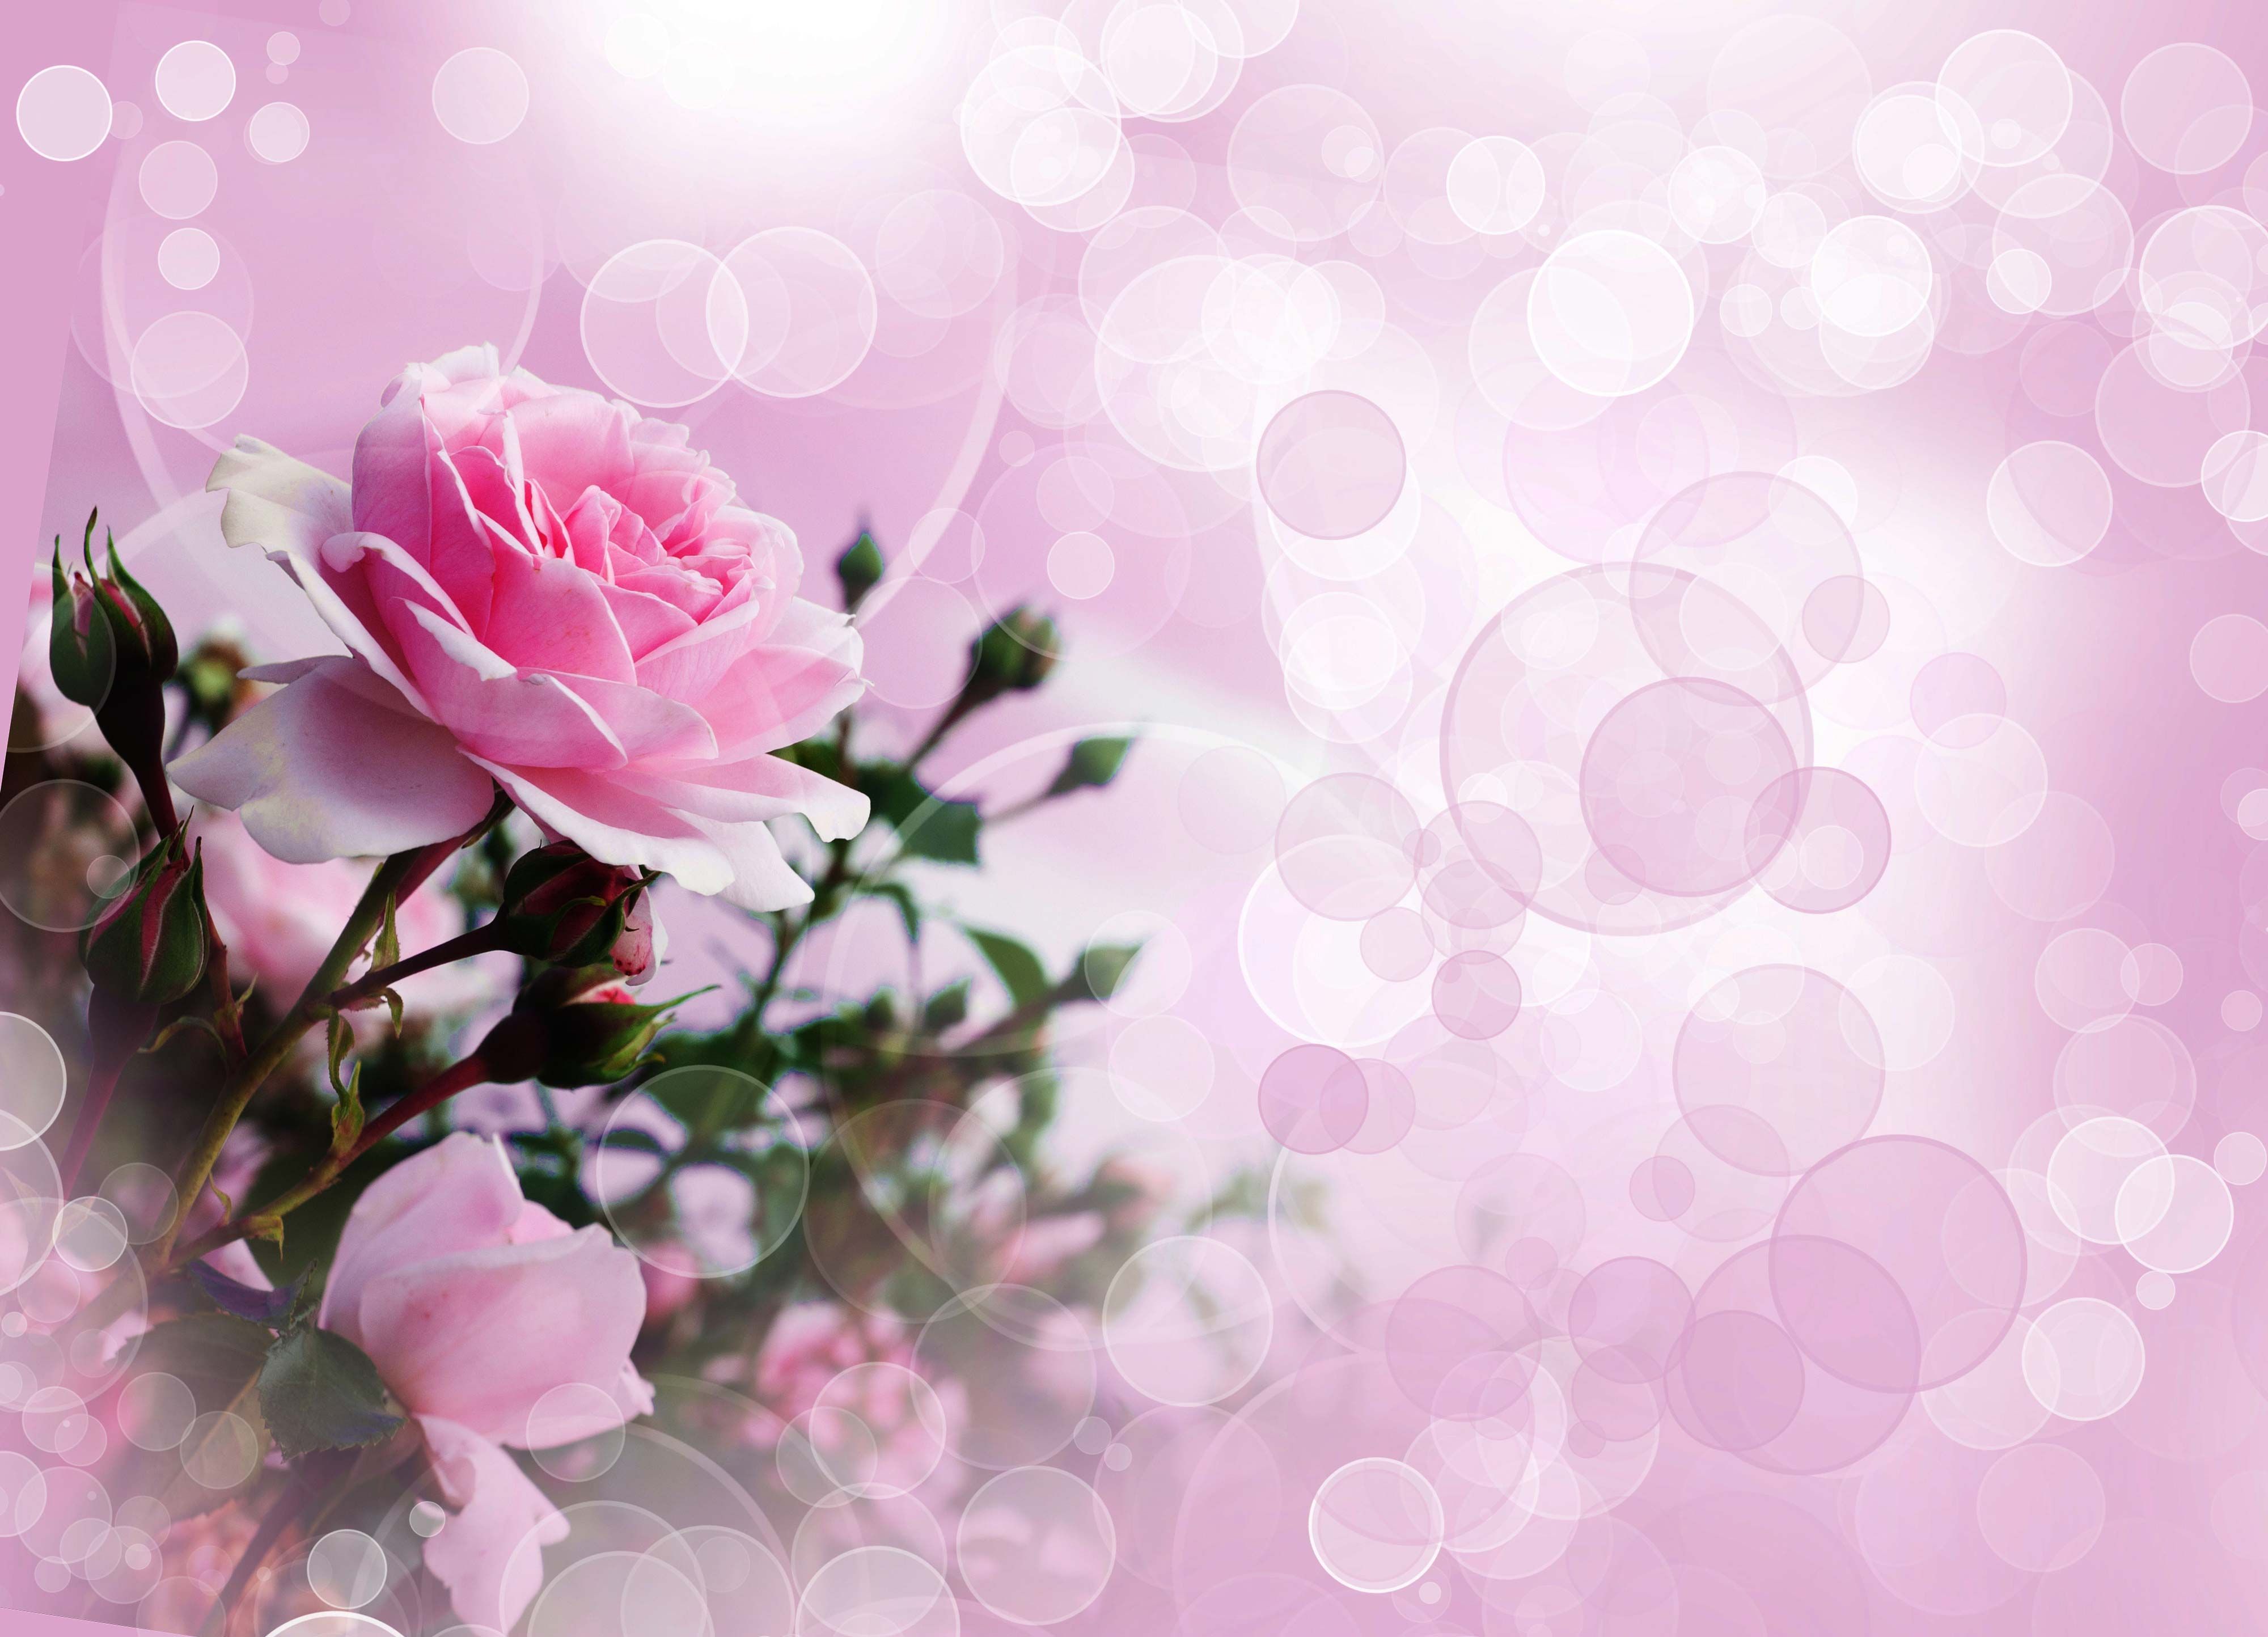 Pink Rose Wallpaper - Pink rose picture, Pink roses background